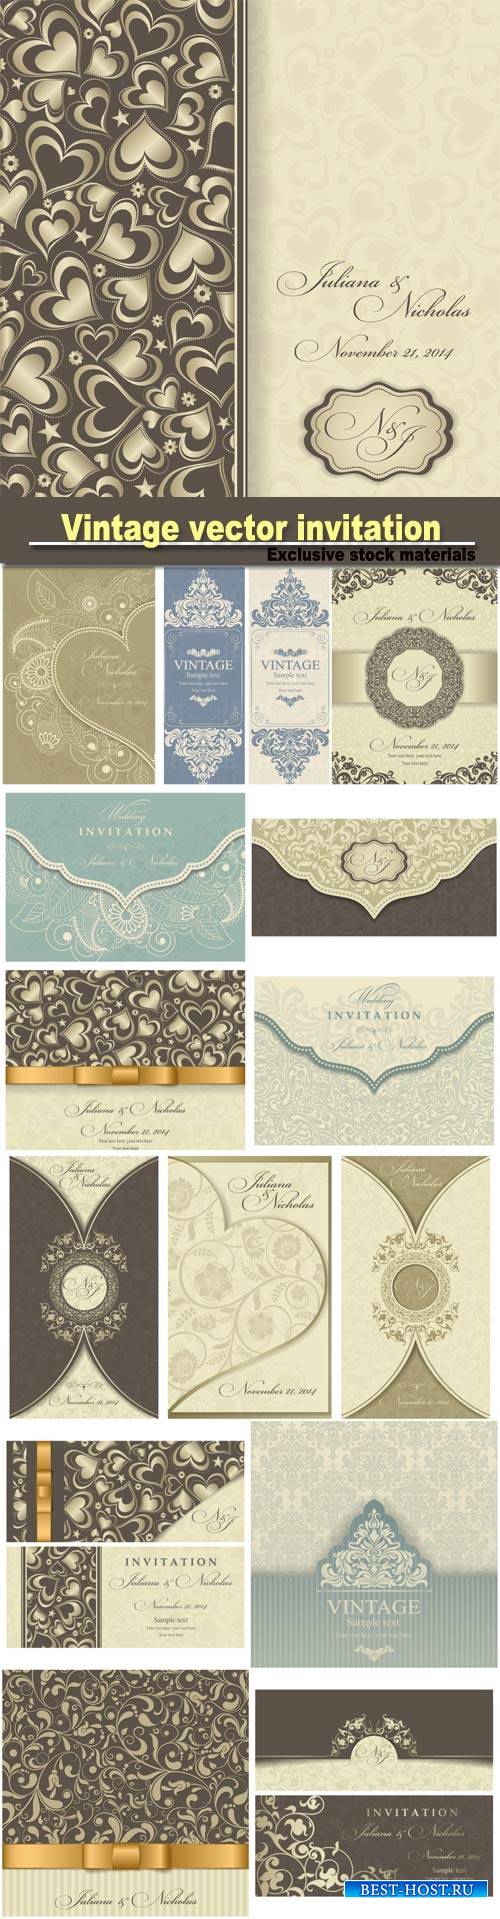 Vintage vector invitation with patterns, envelopes